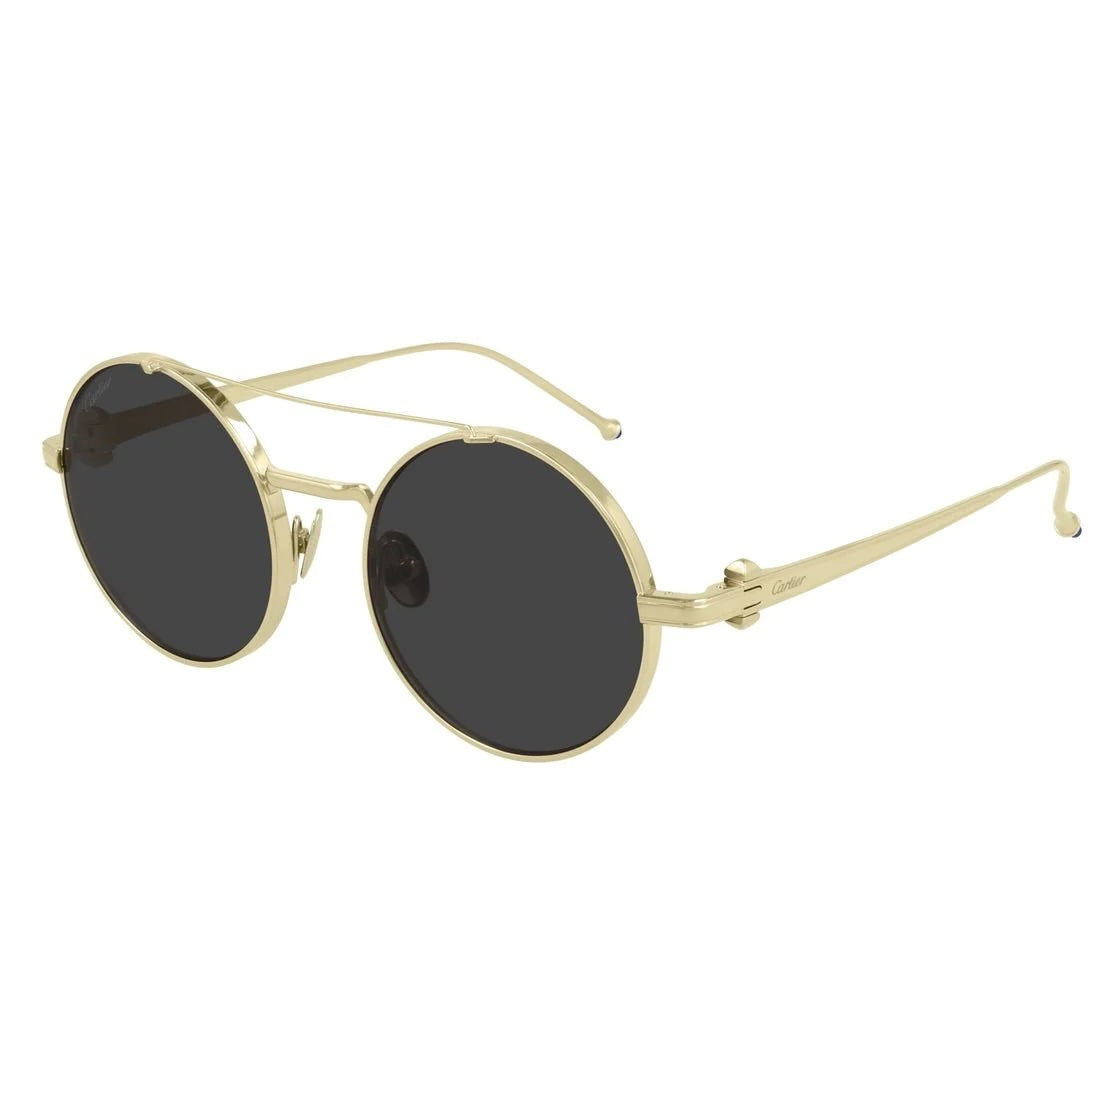 Cartier sunglasses similar to Bronson sunglasses